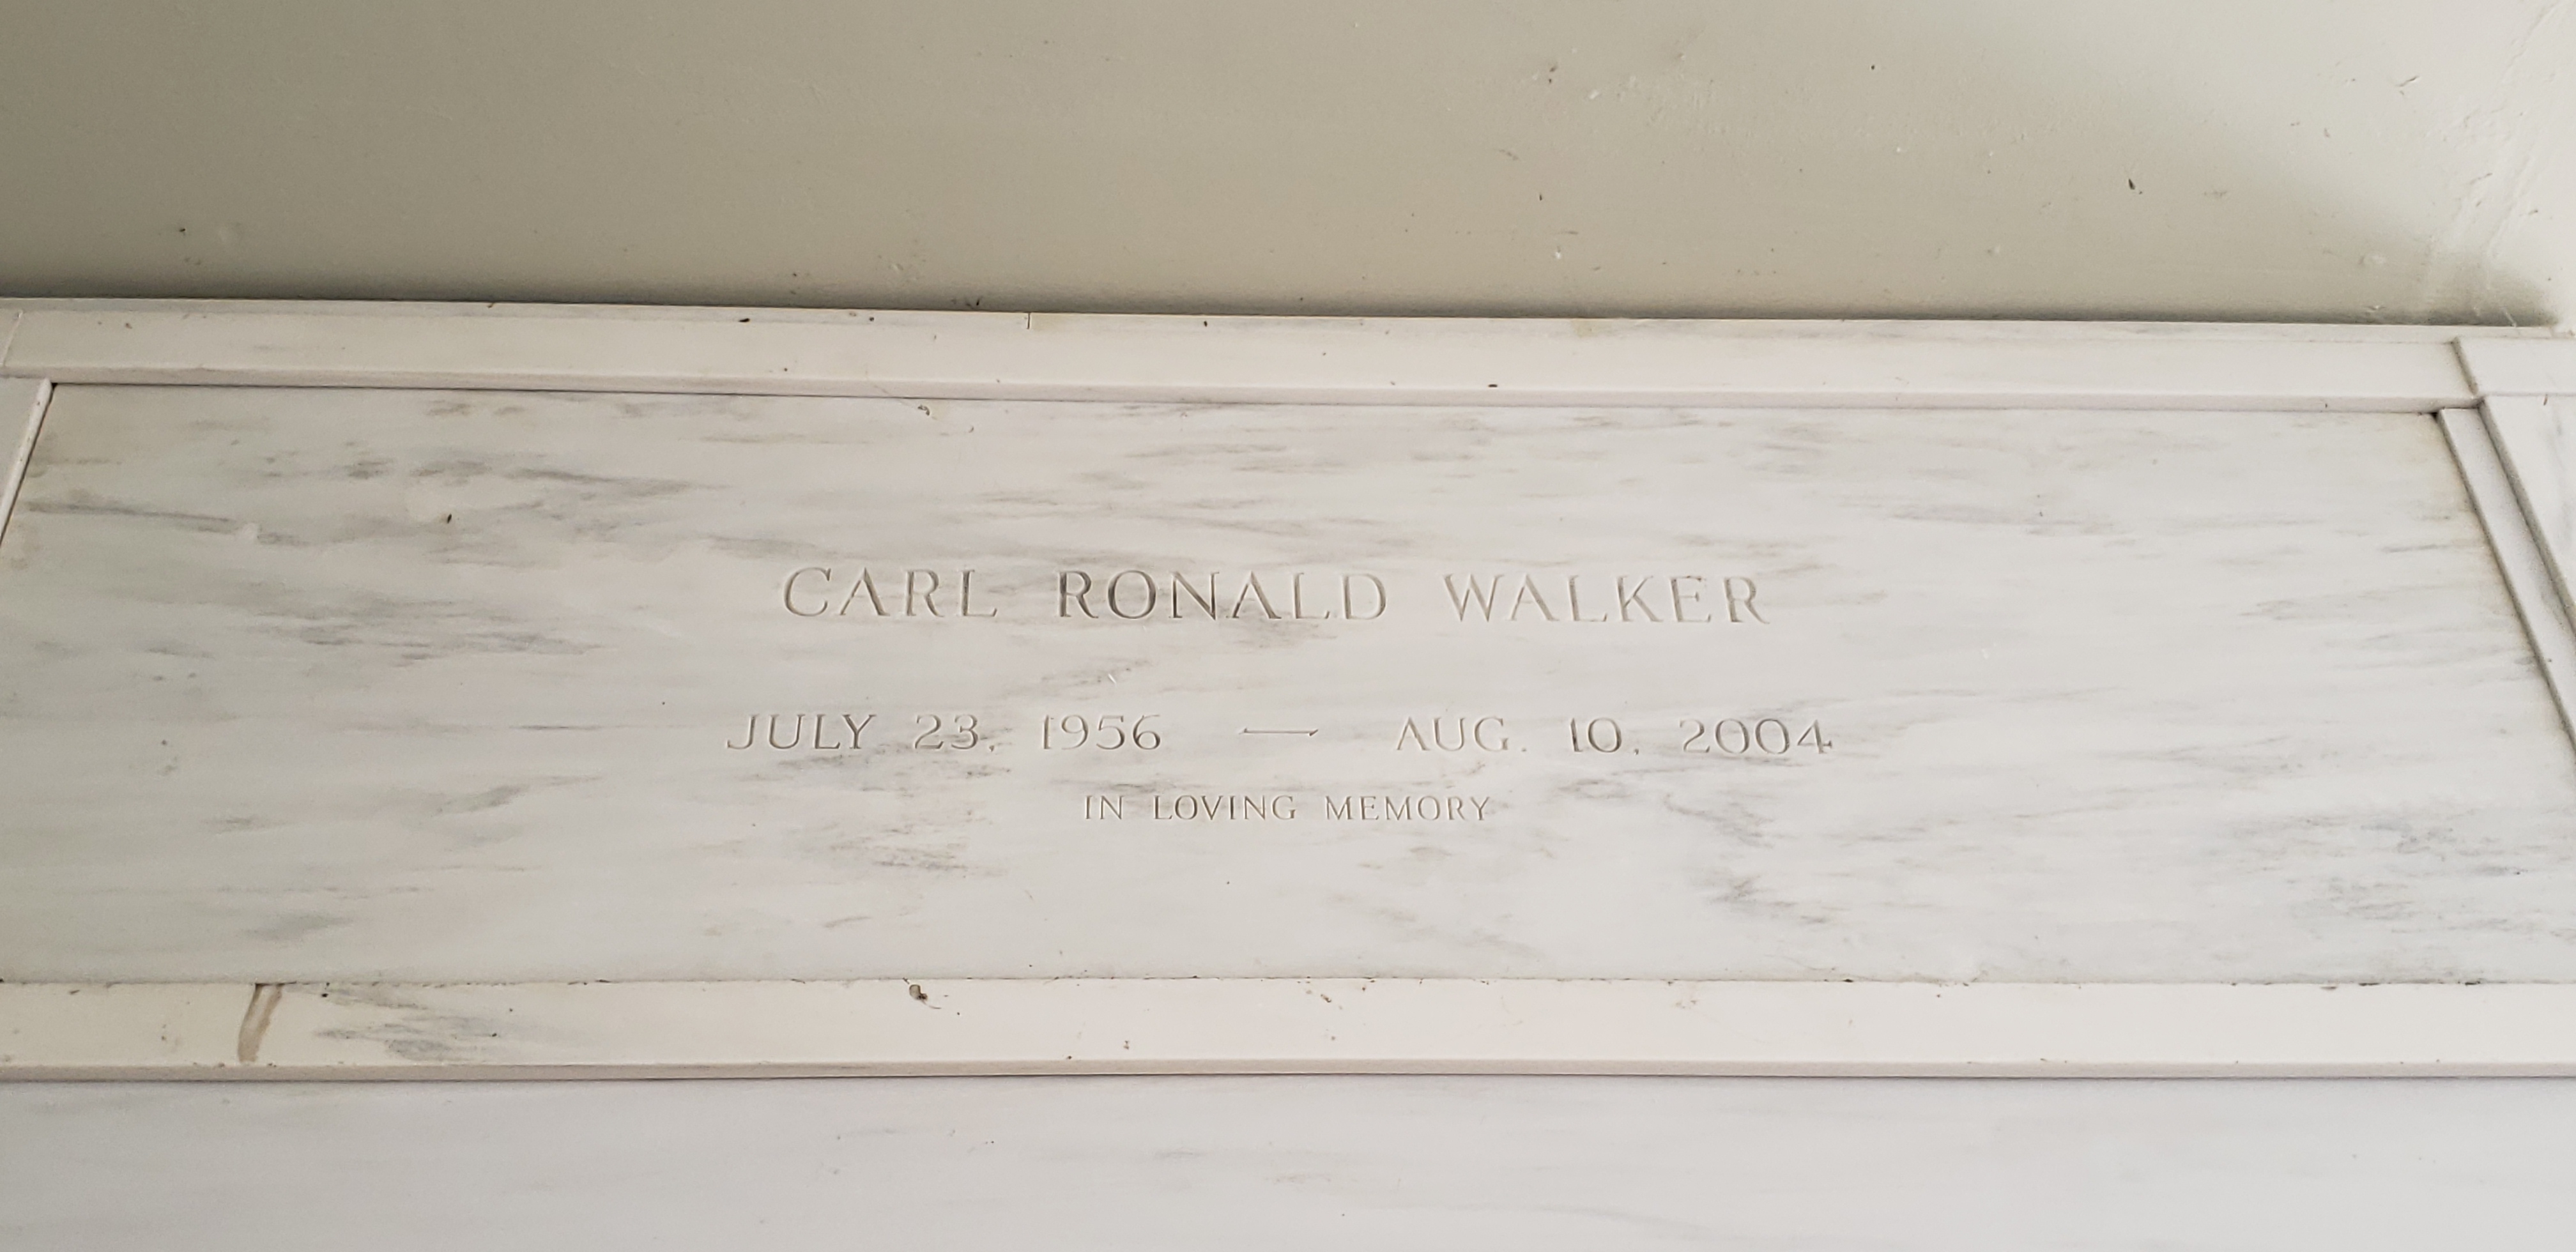 Carl Ronald Walker